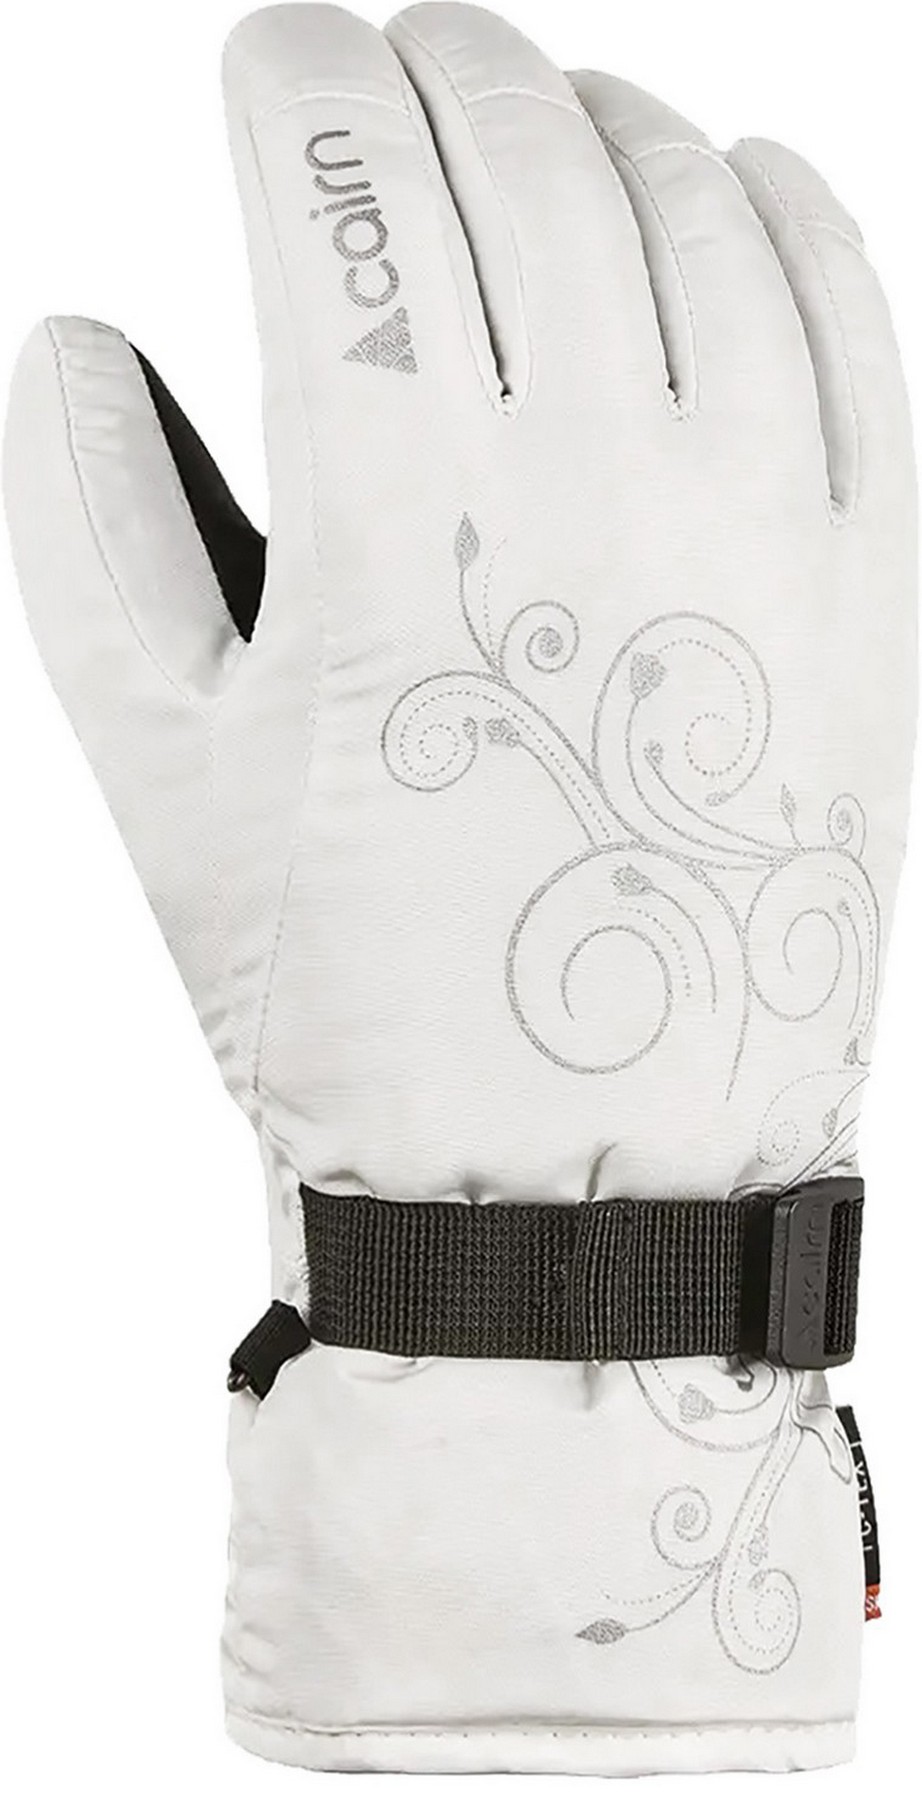 Лыжные перчатки для взрослых Cairn Augusta W white-grey 6